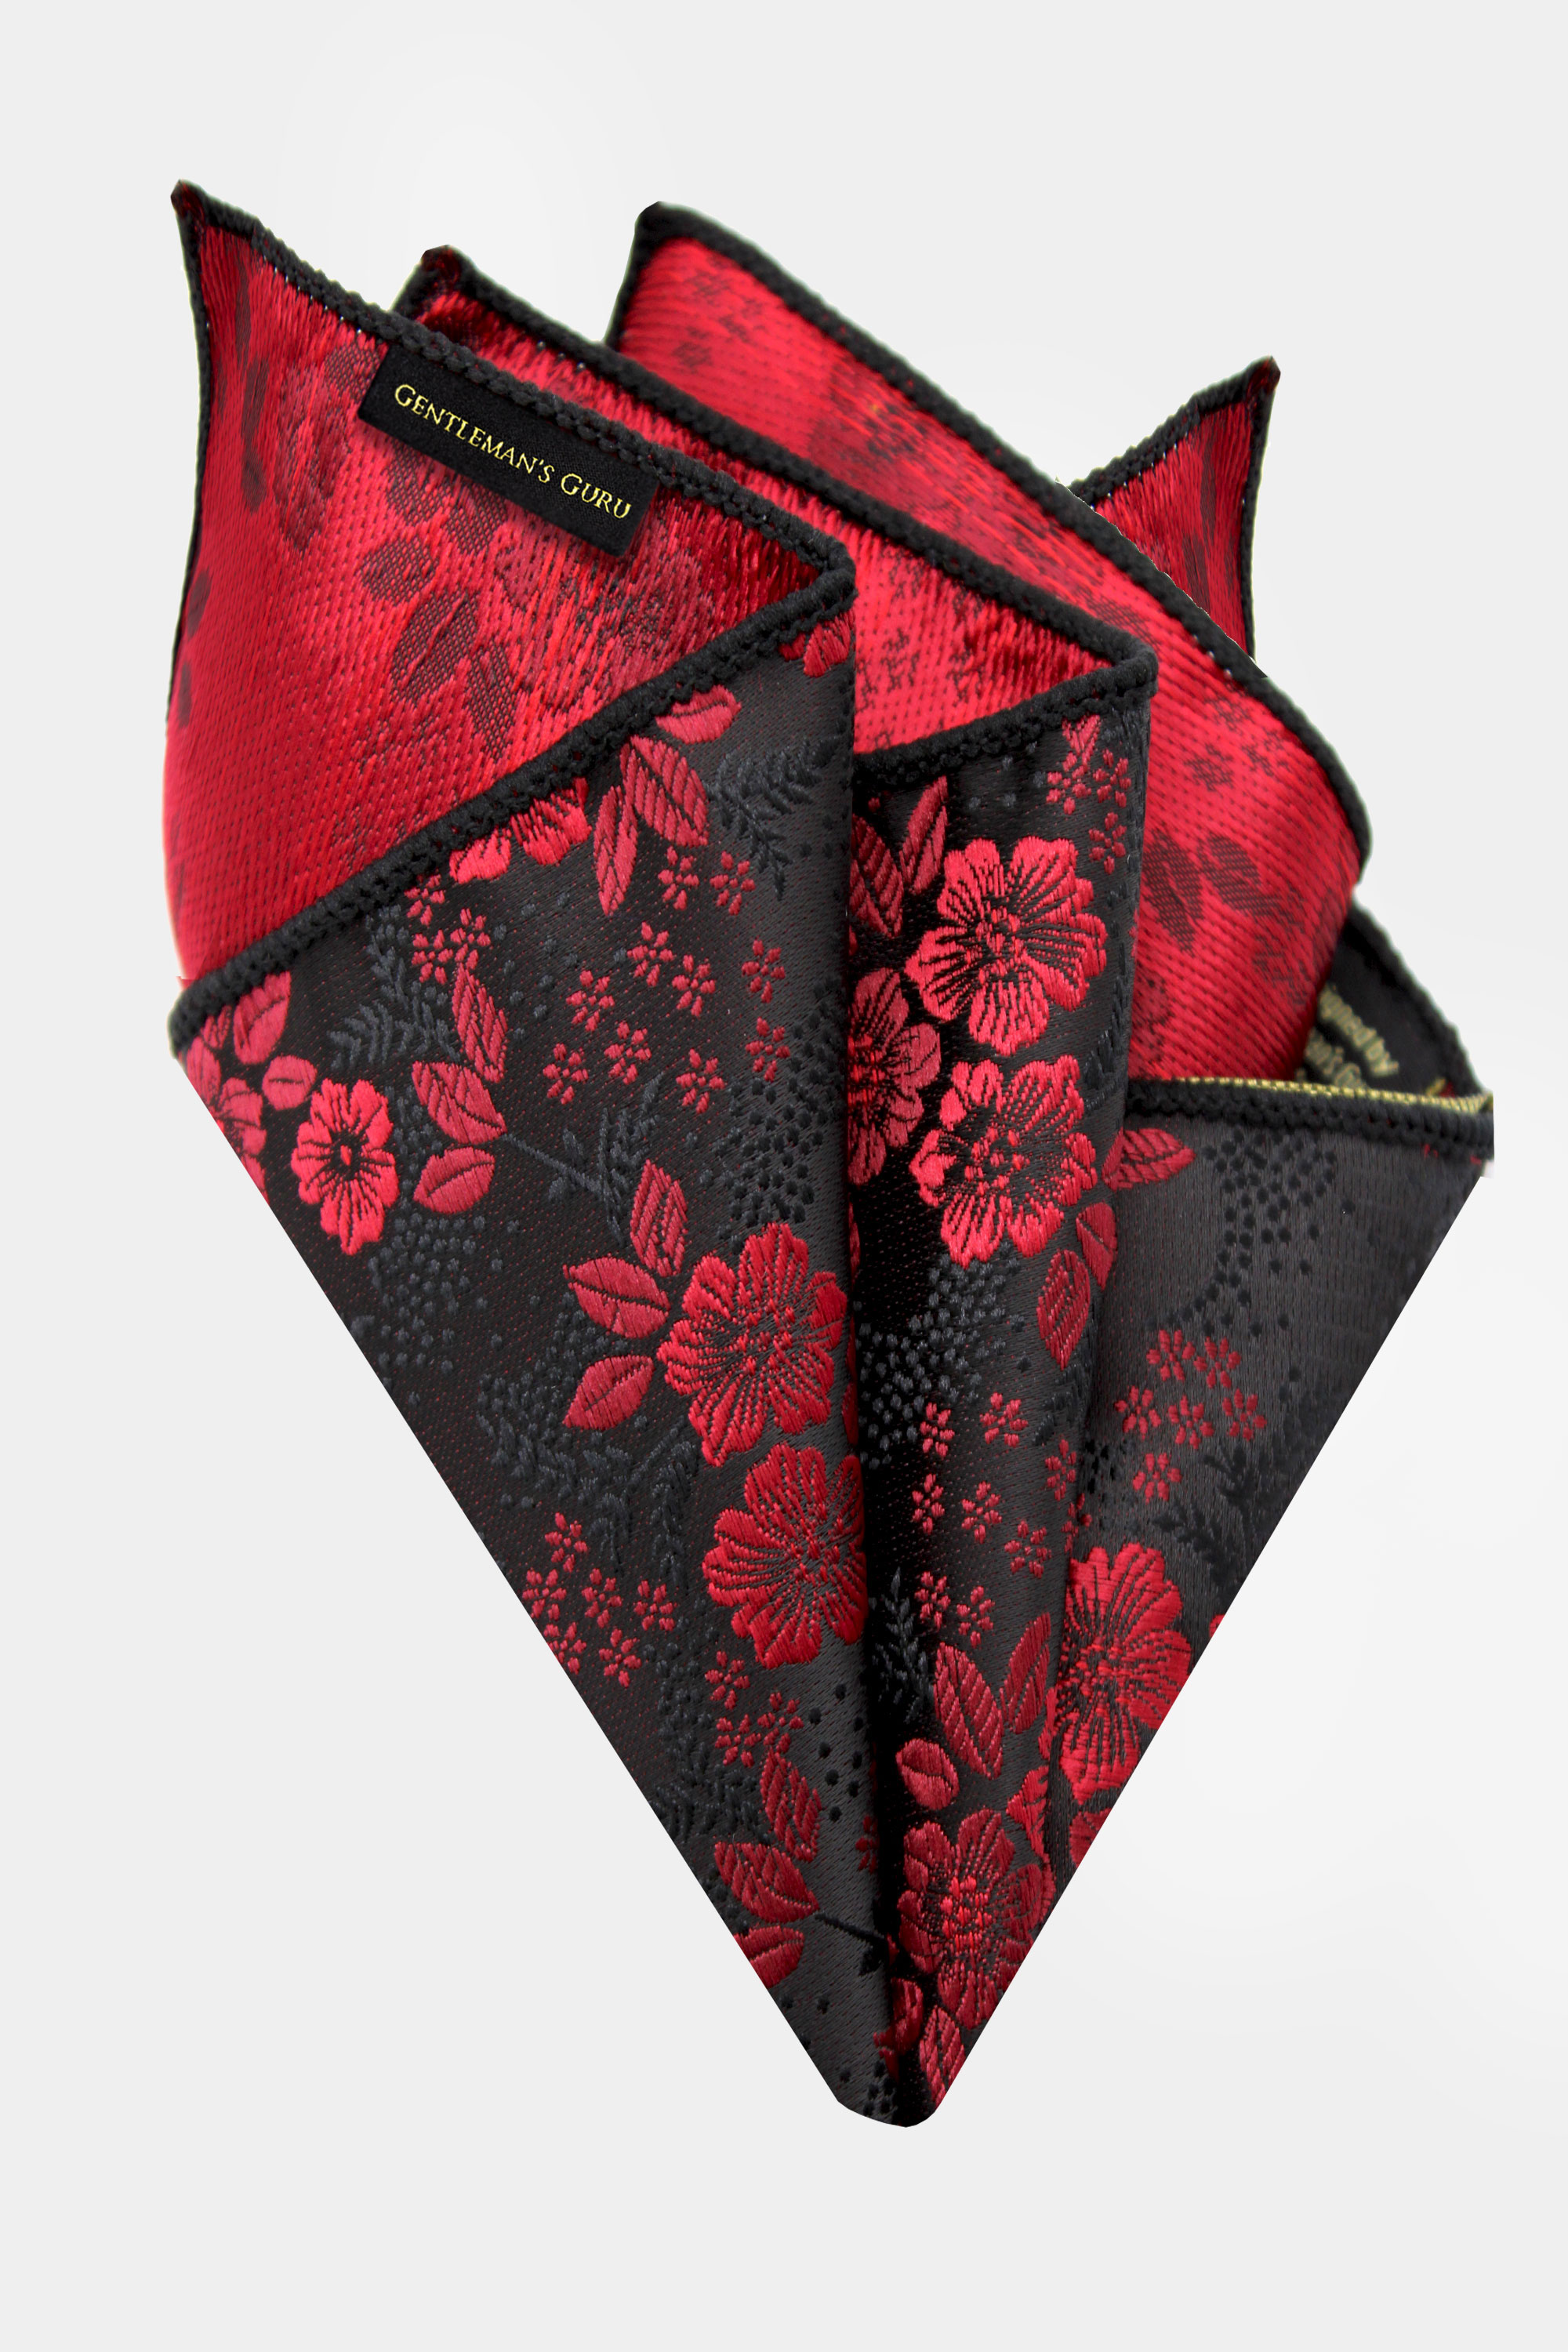 Burgundy-Floral-Pocket-Square-Handkerchief-from-Gentlemansguru.com